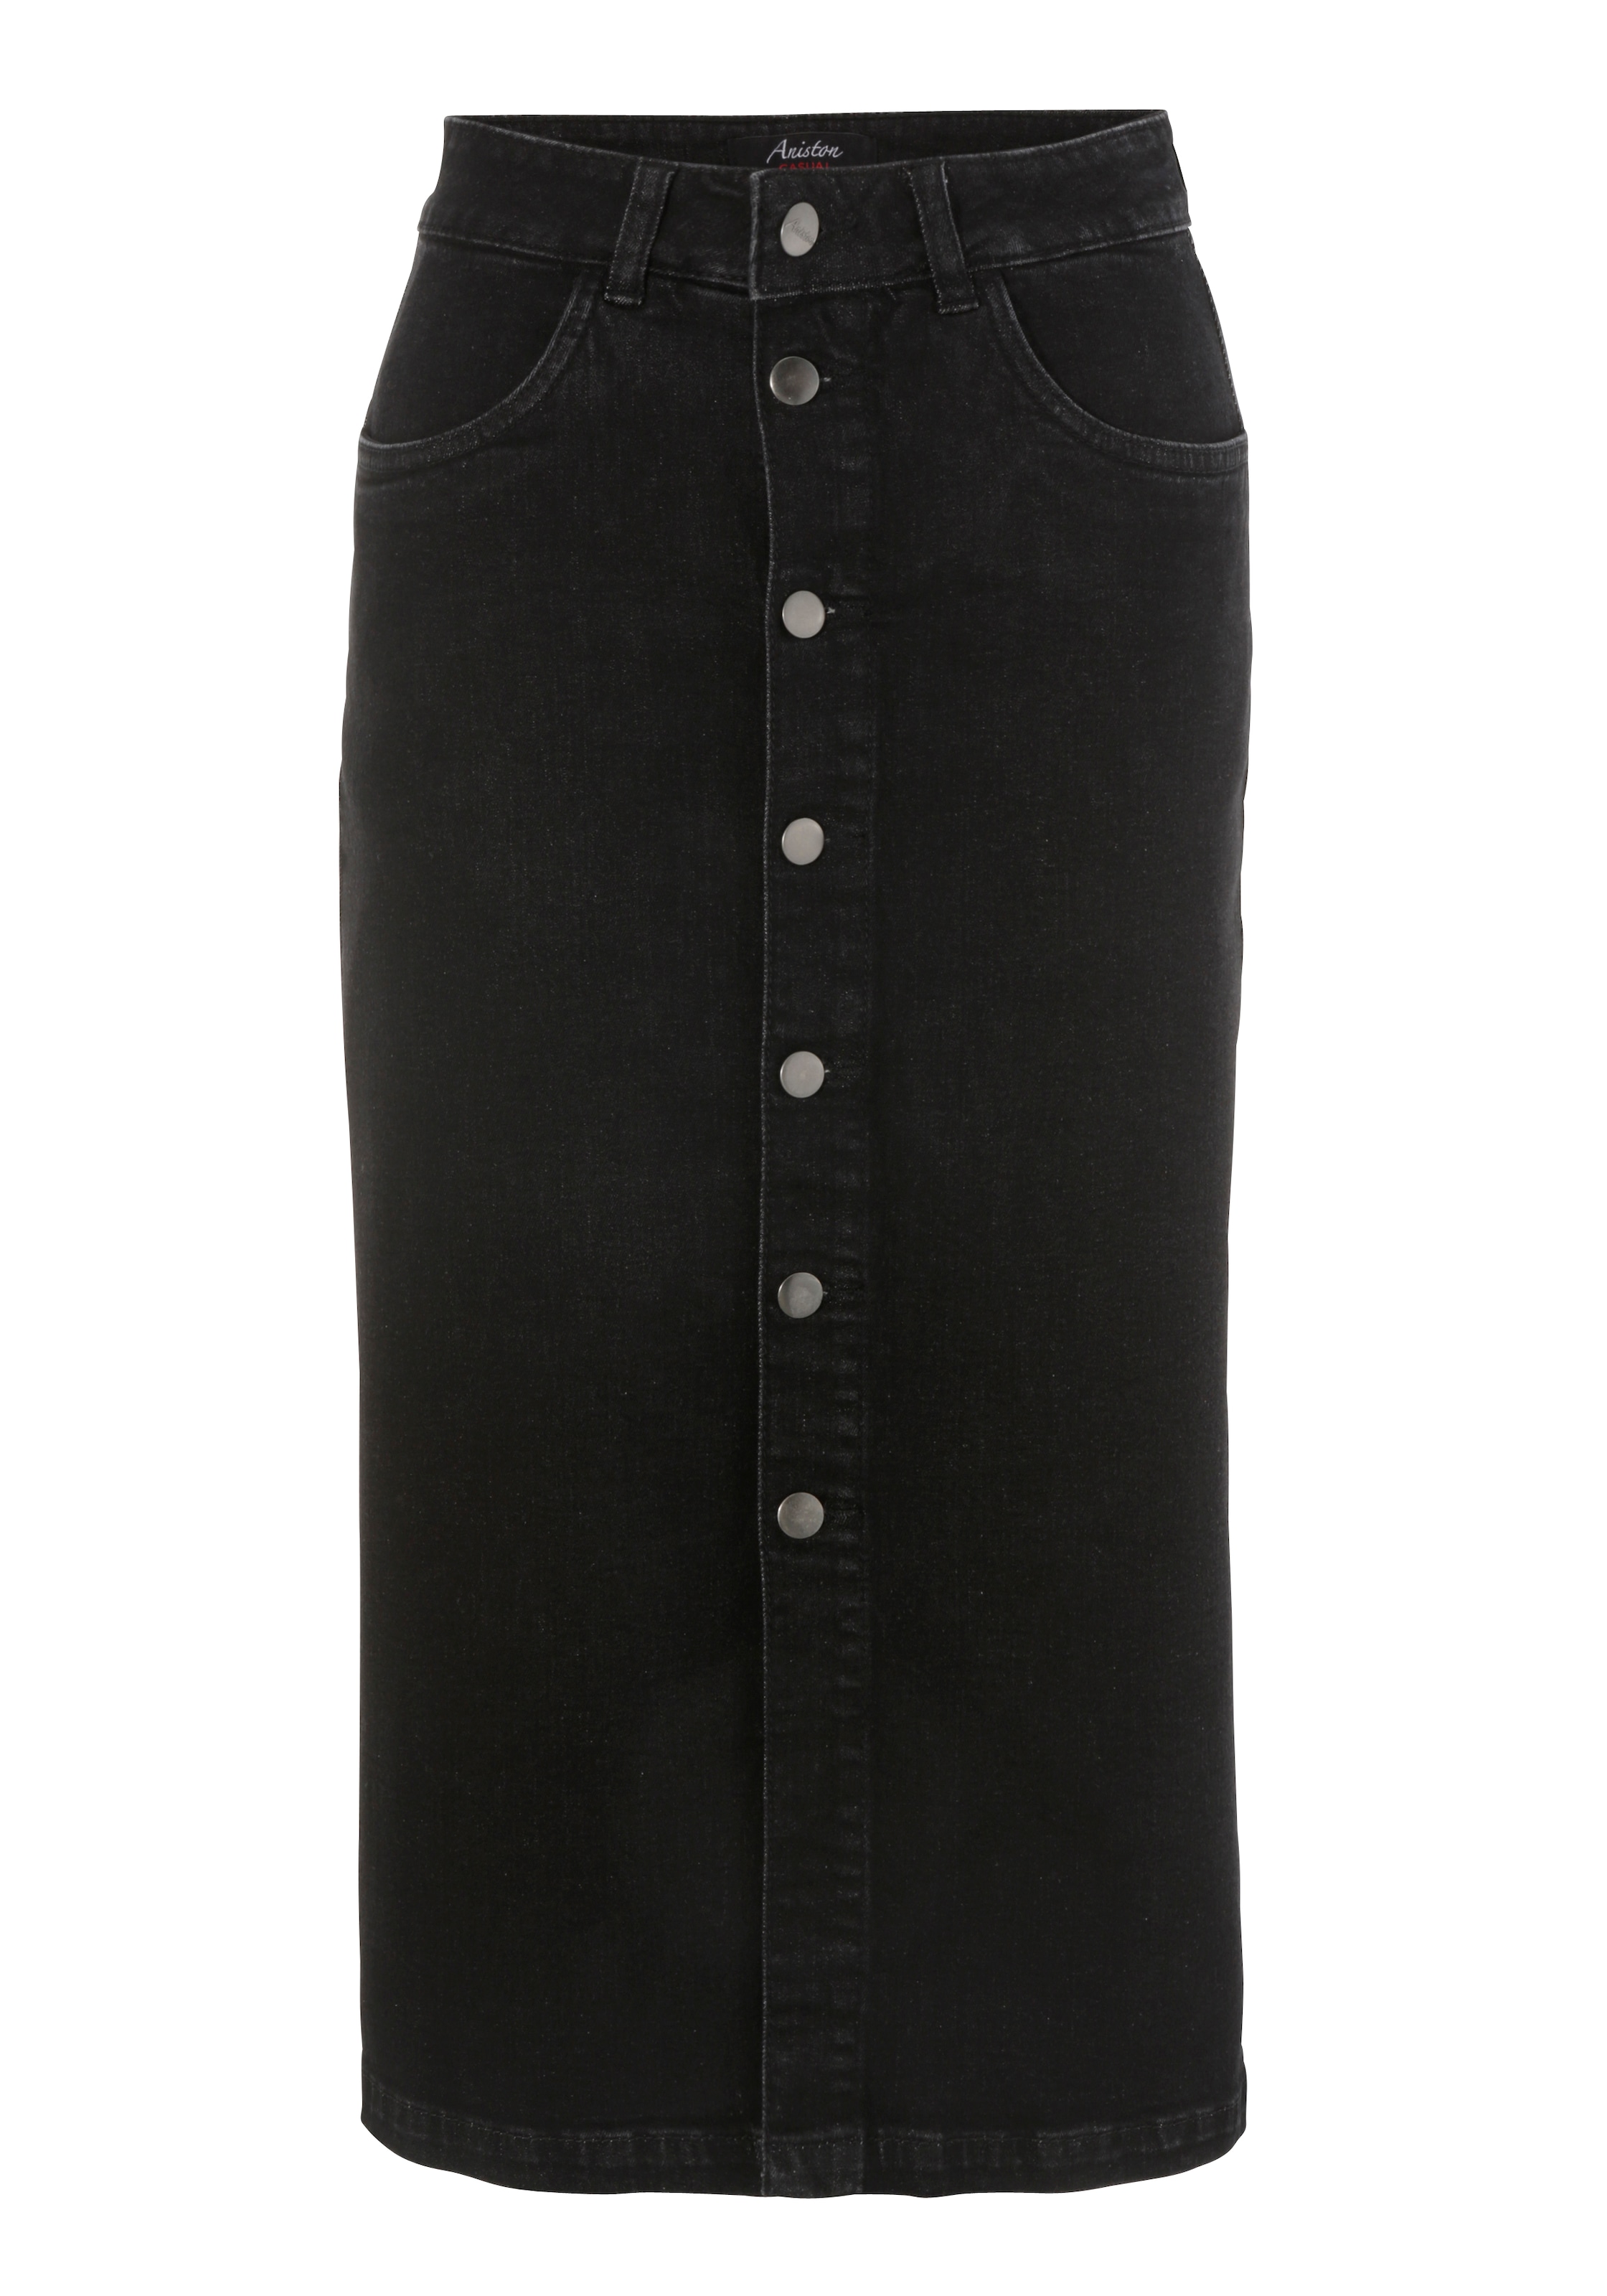 Aniston CASUAL Jeansrock, mit Knopfverschluss